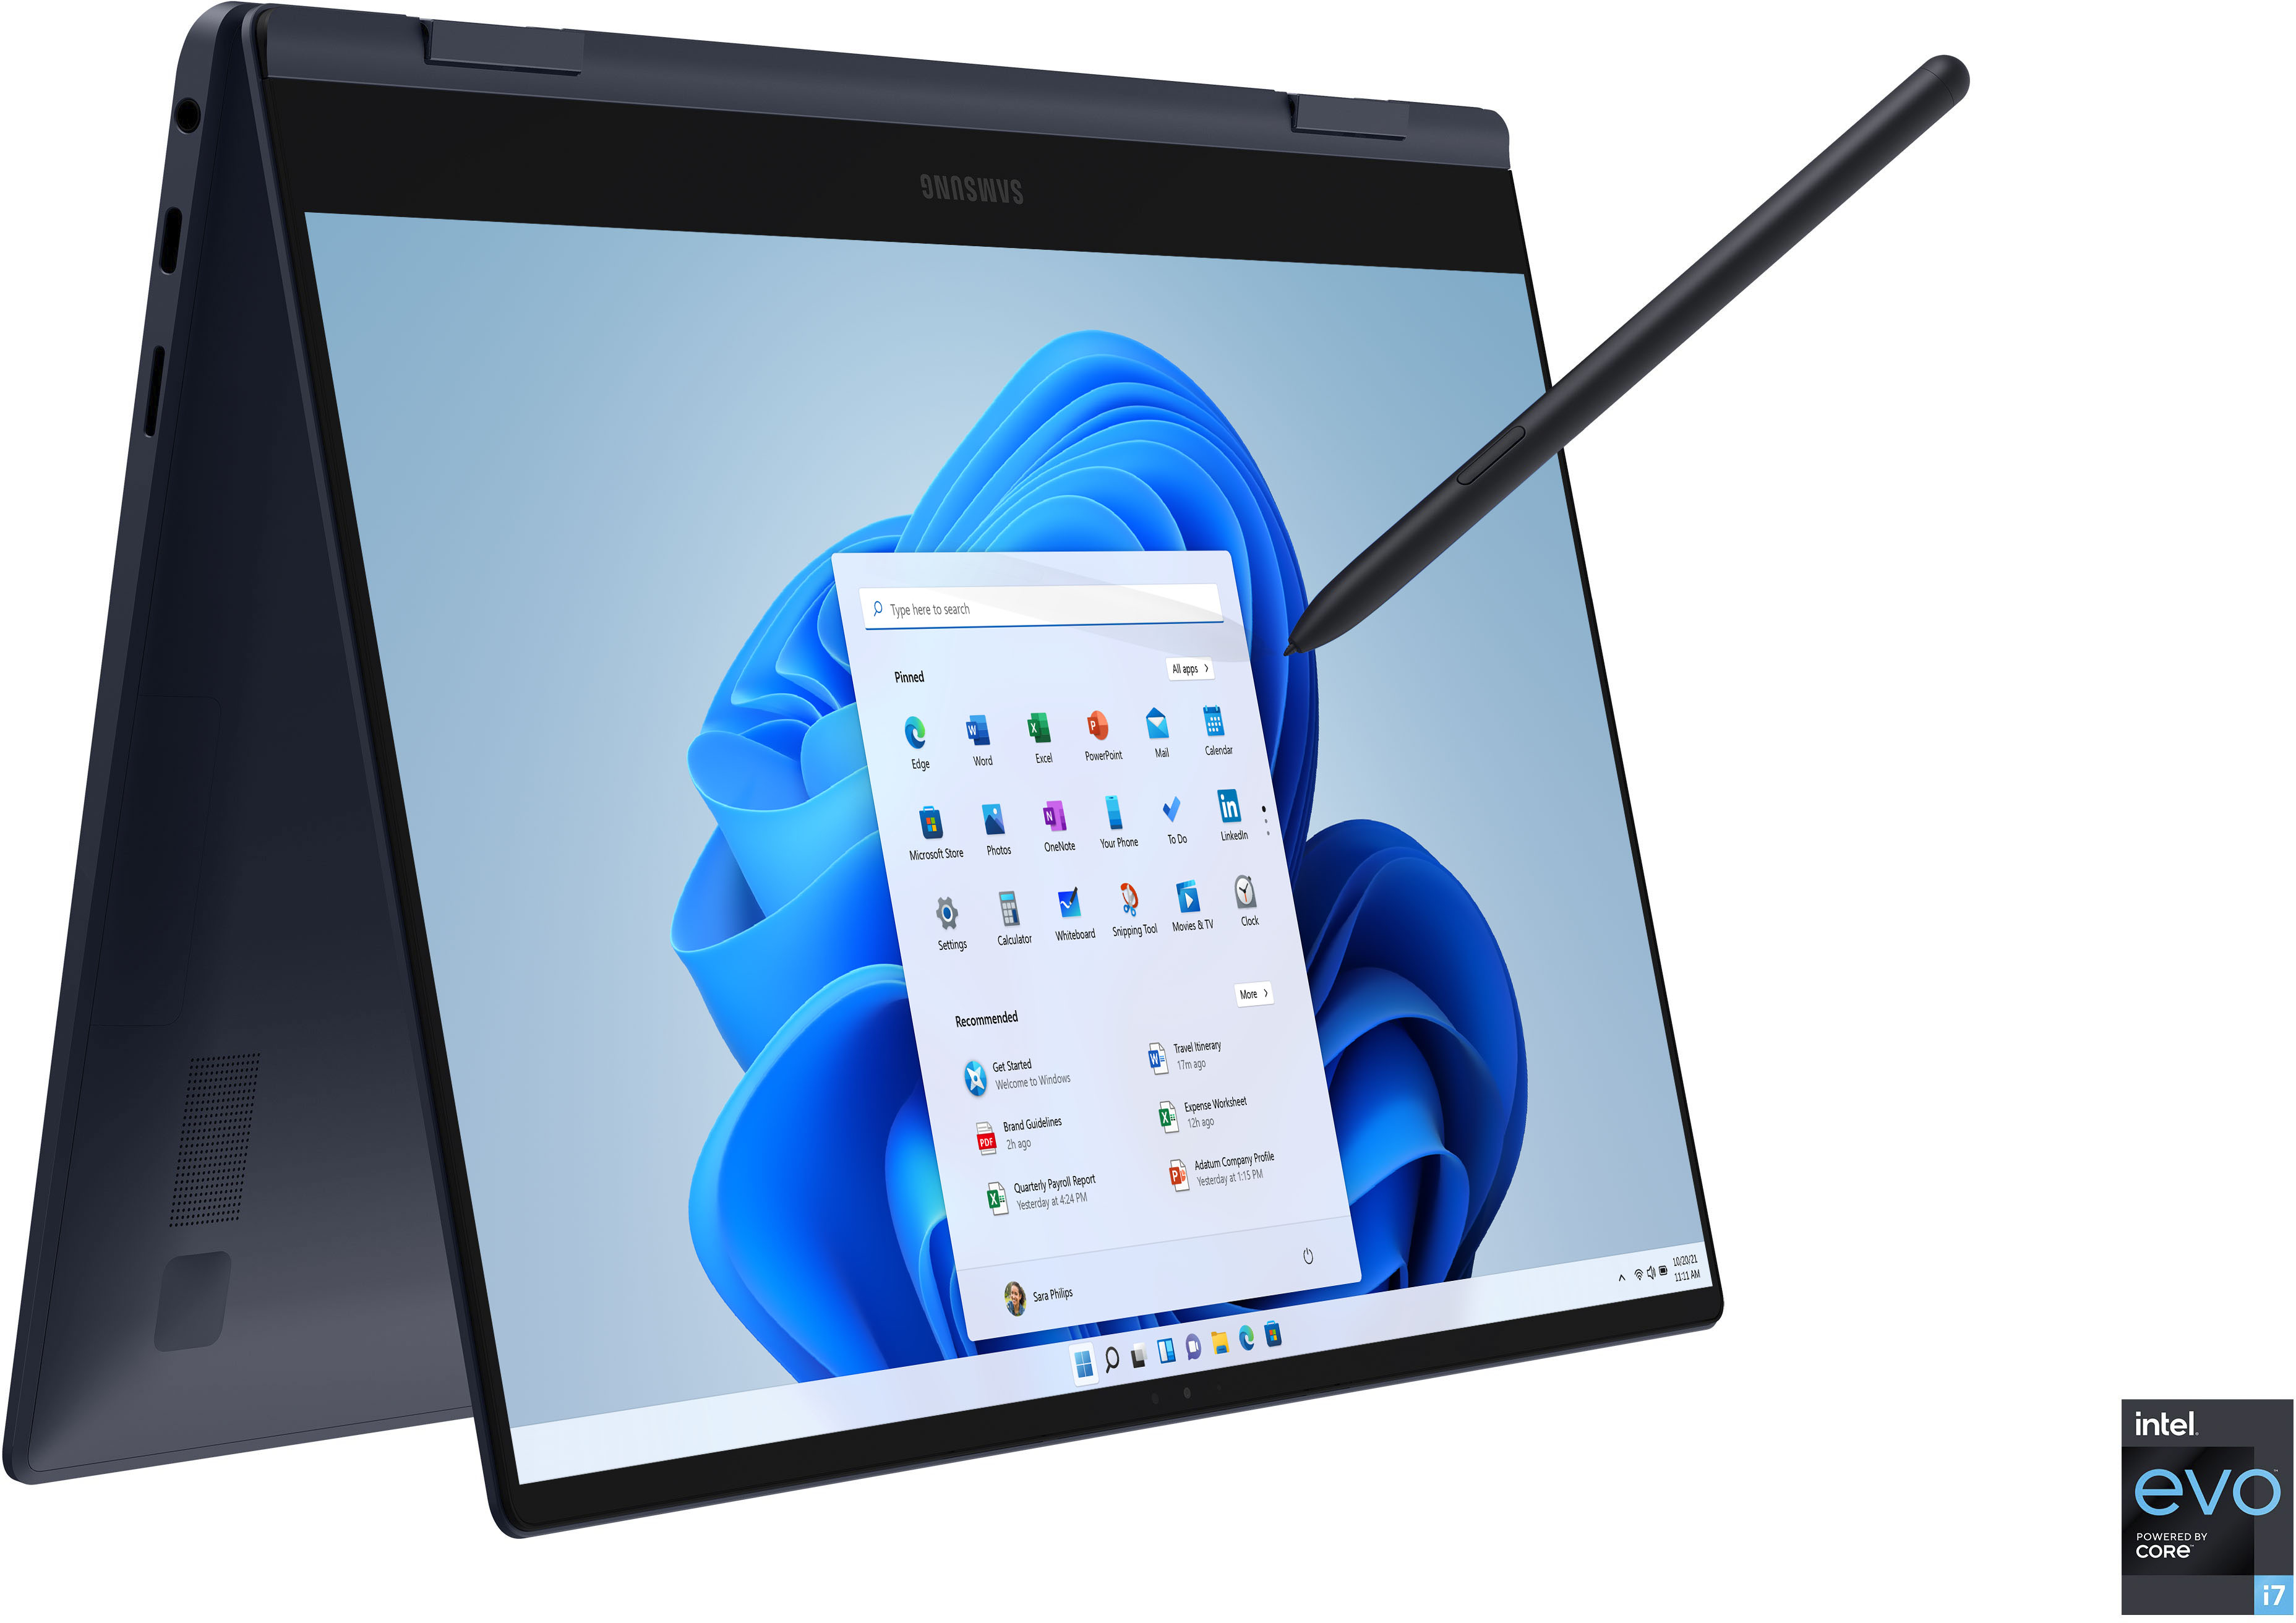 2TB SSD|16GB RAM|Win 10 Pro New Samsung Galaxy Book Pro 360 15 2-in-1 AMOLED Touch-Screen Laptop 11th Gen Intel Evo Core i7-1165G7 Stylus S-Pen Best Notebook Stylus Pen Light Mystic Navy